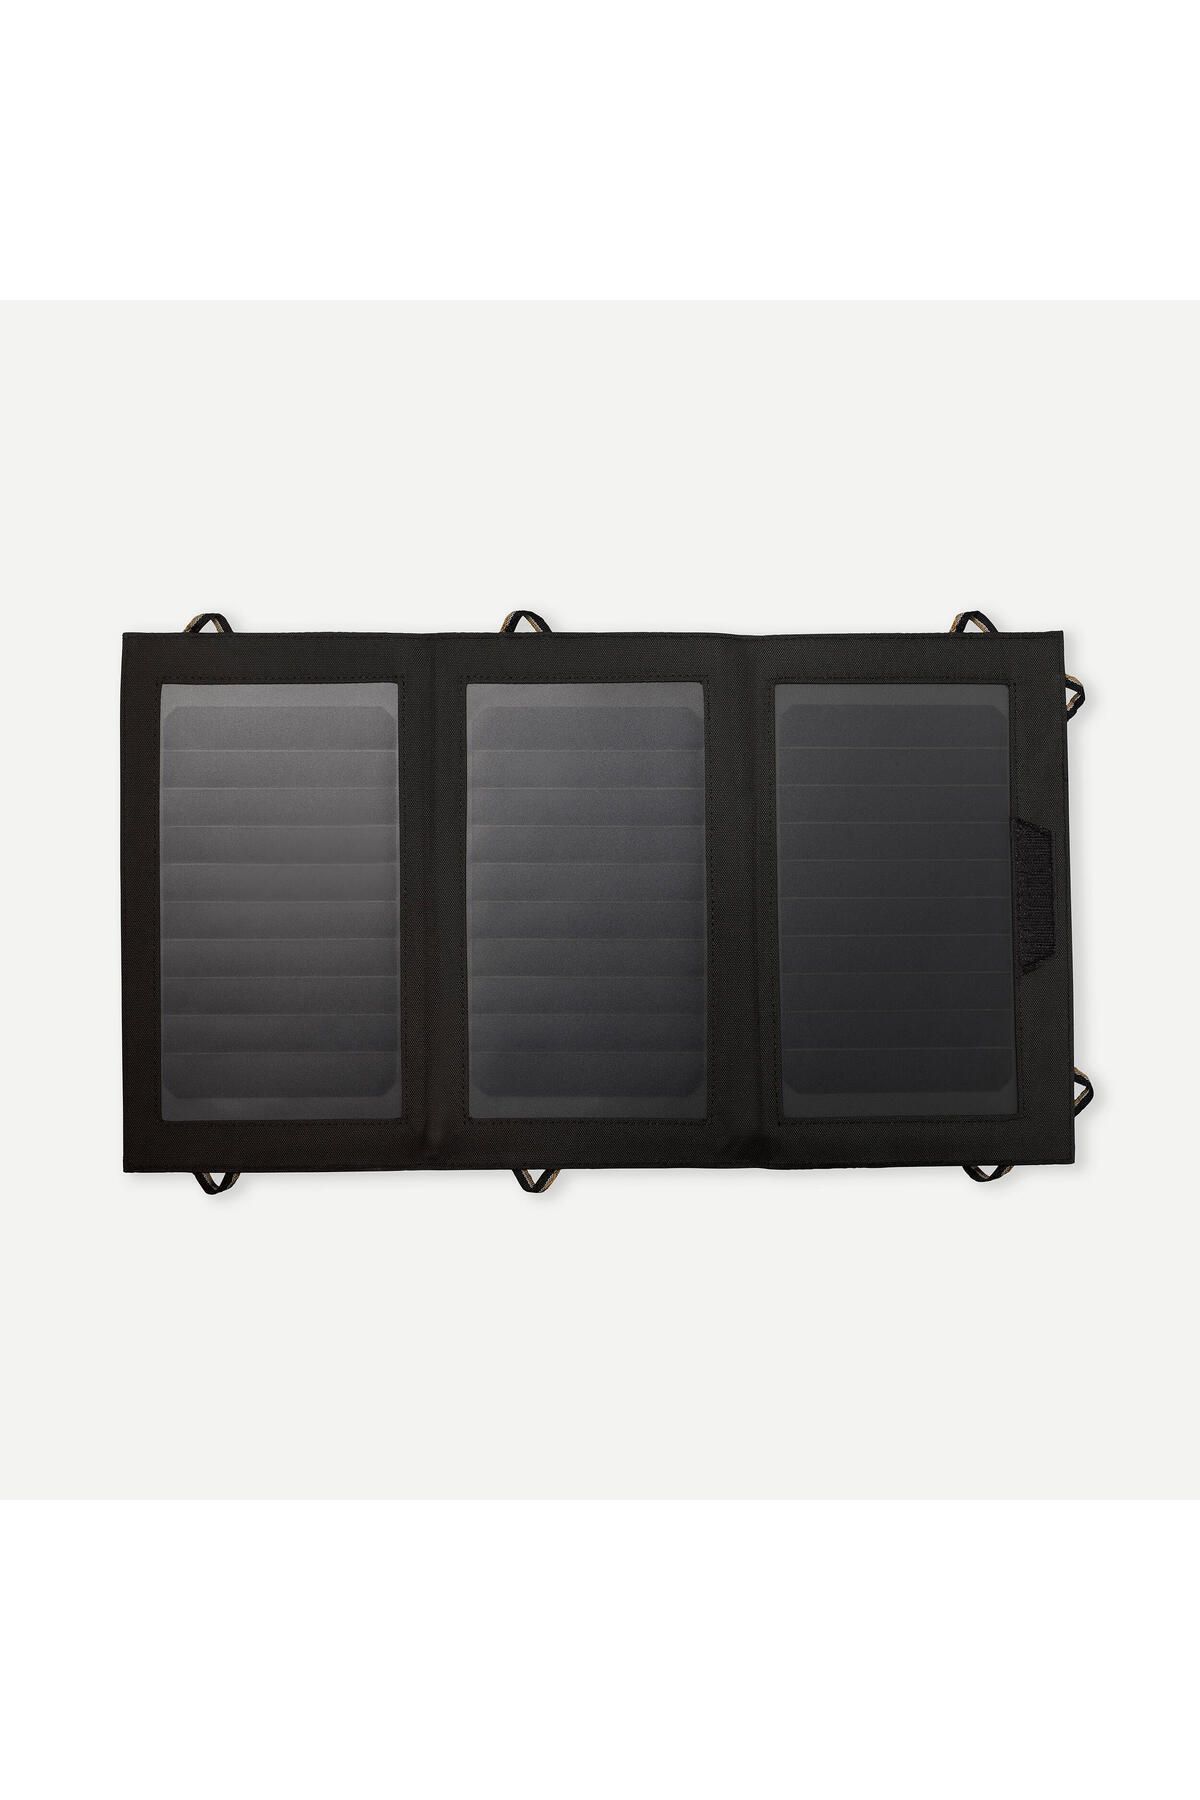 Decathlon USB Güneş Paneli - 15W - SLR900 V2